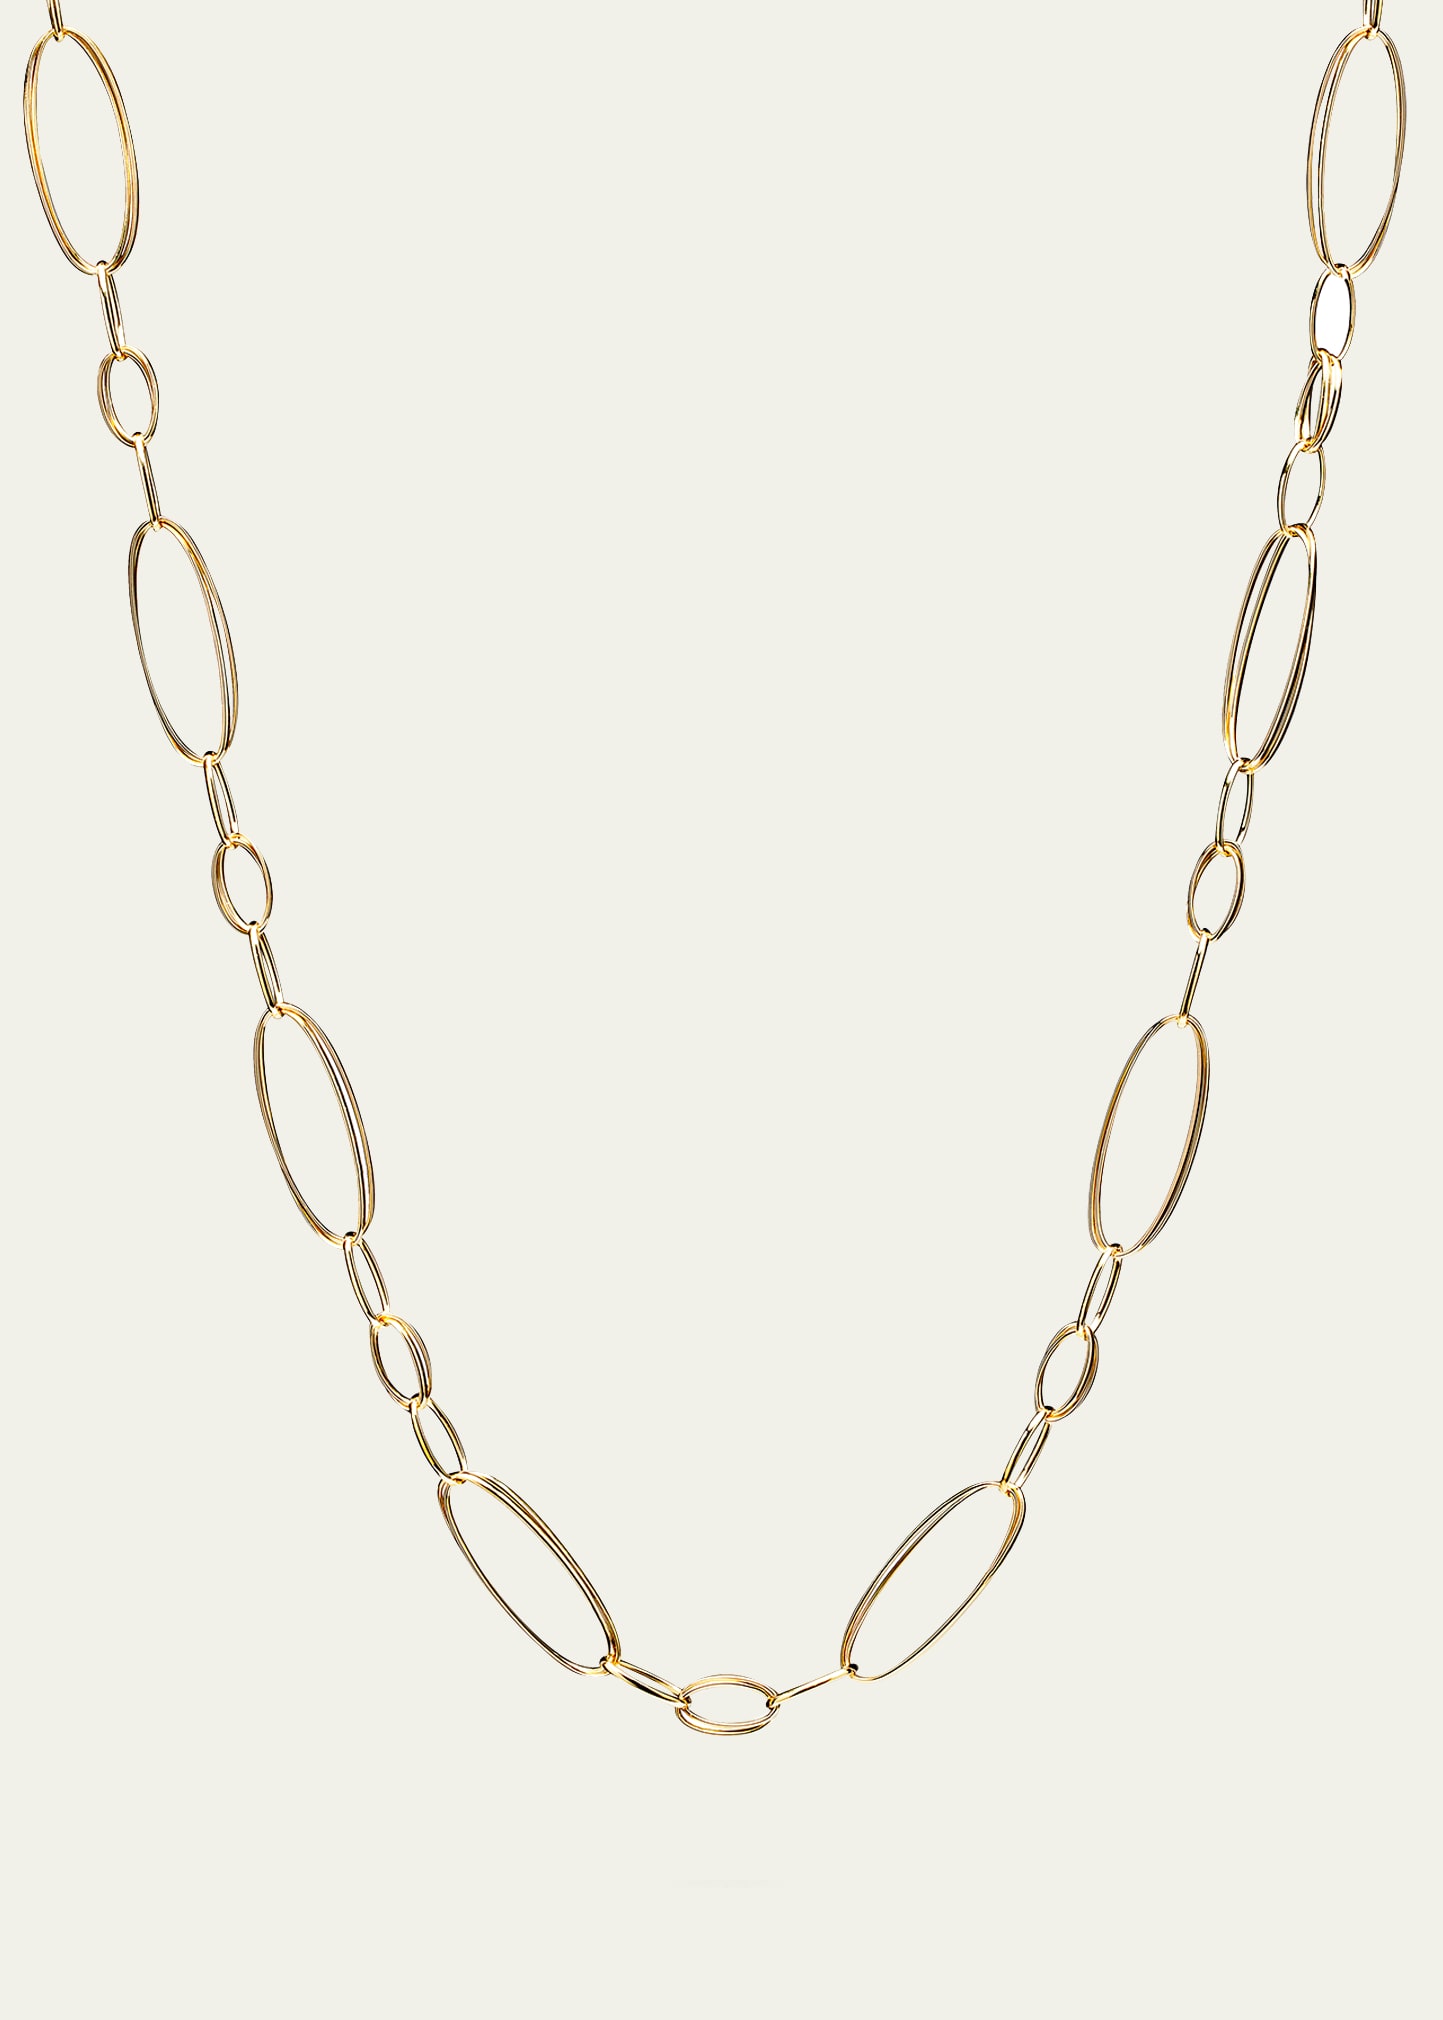 18k Gold Ellipse Chain Necklace, 19"